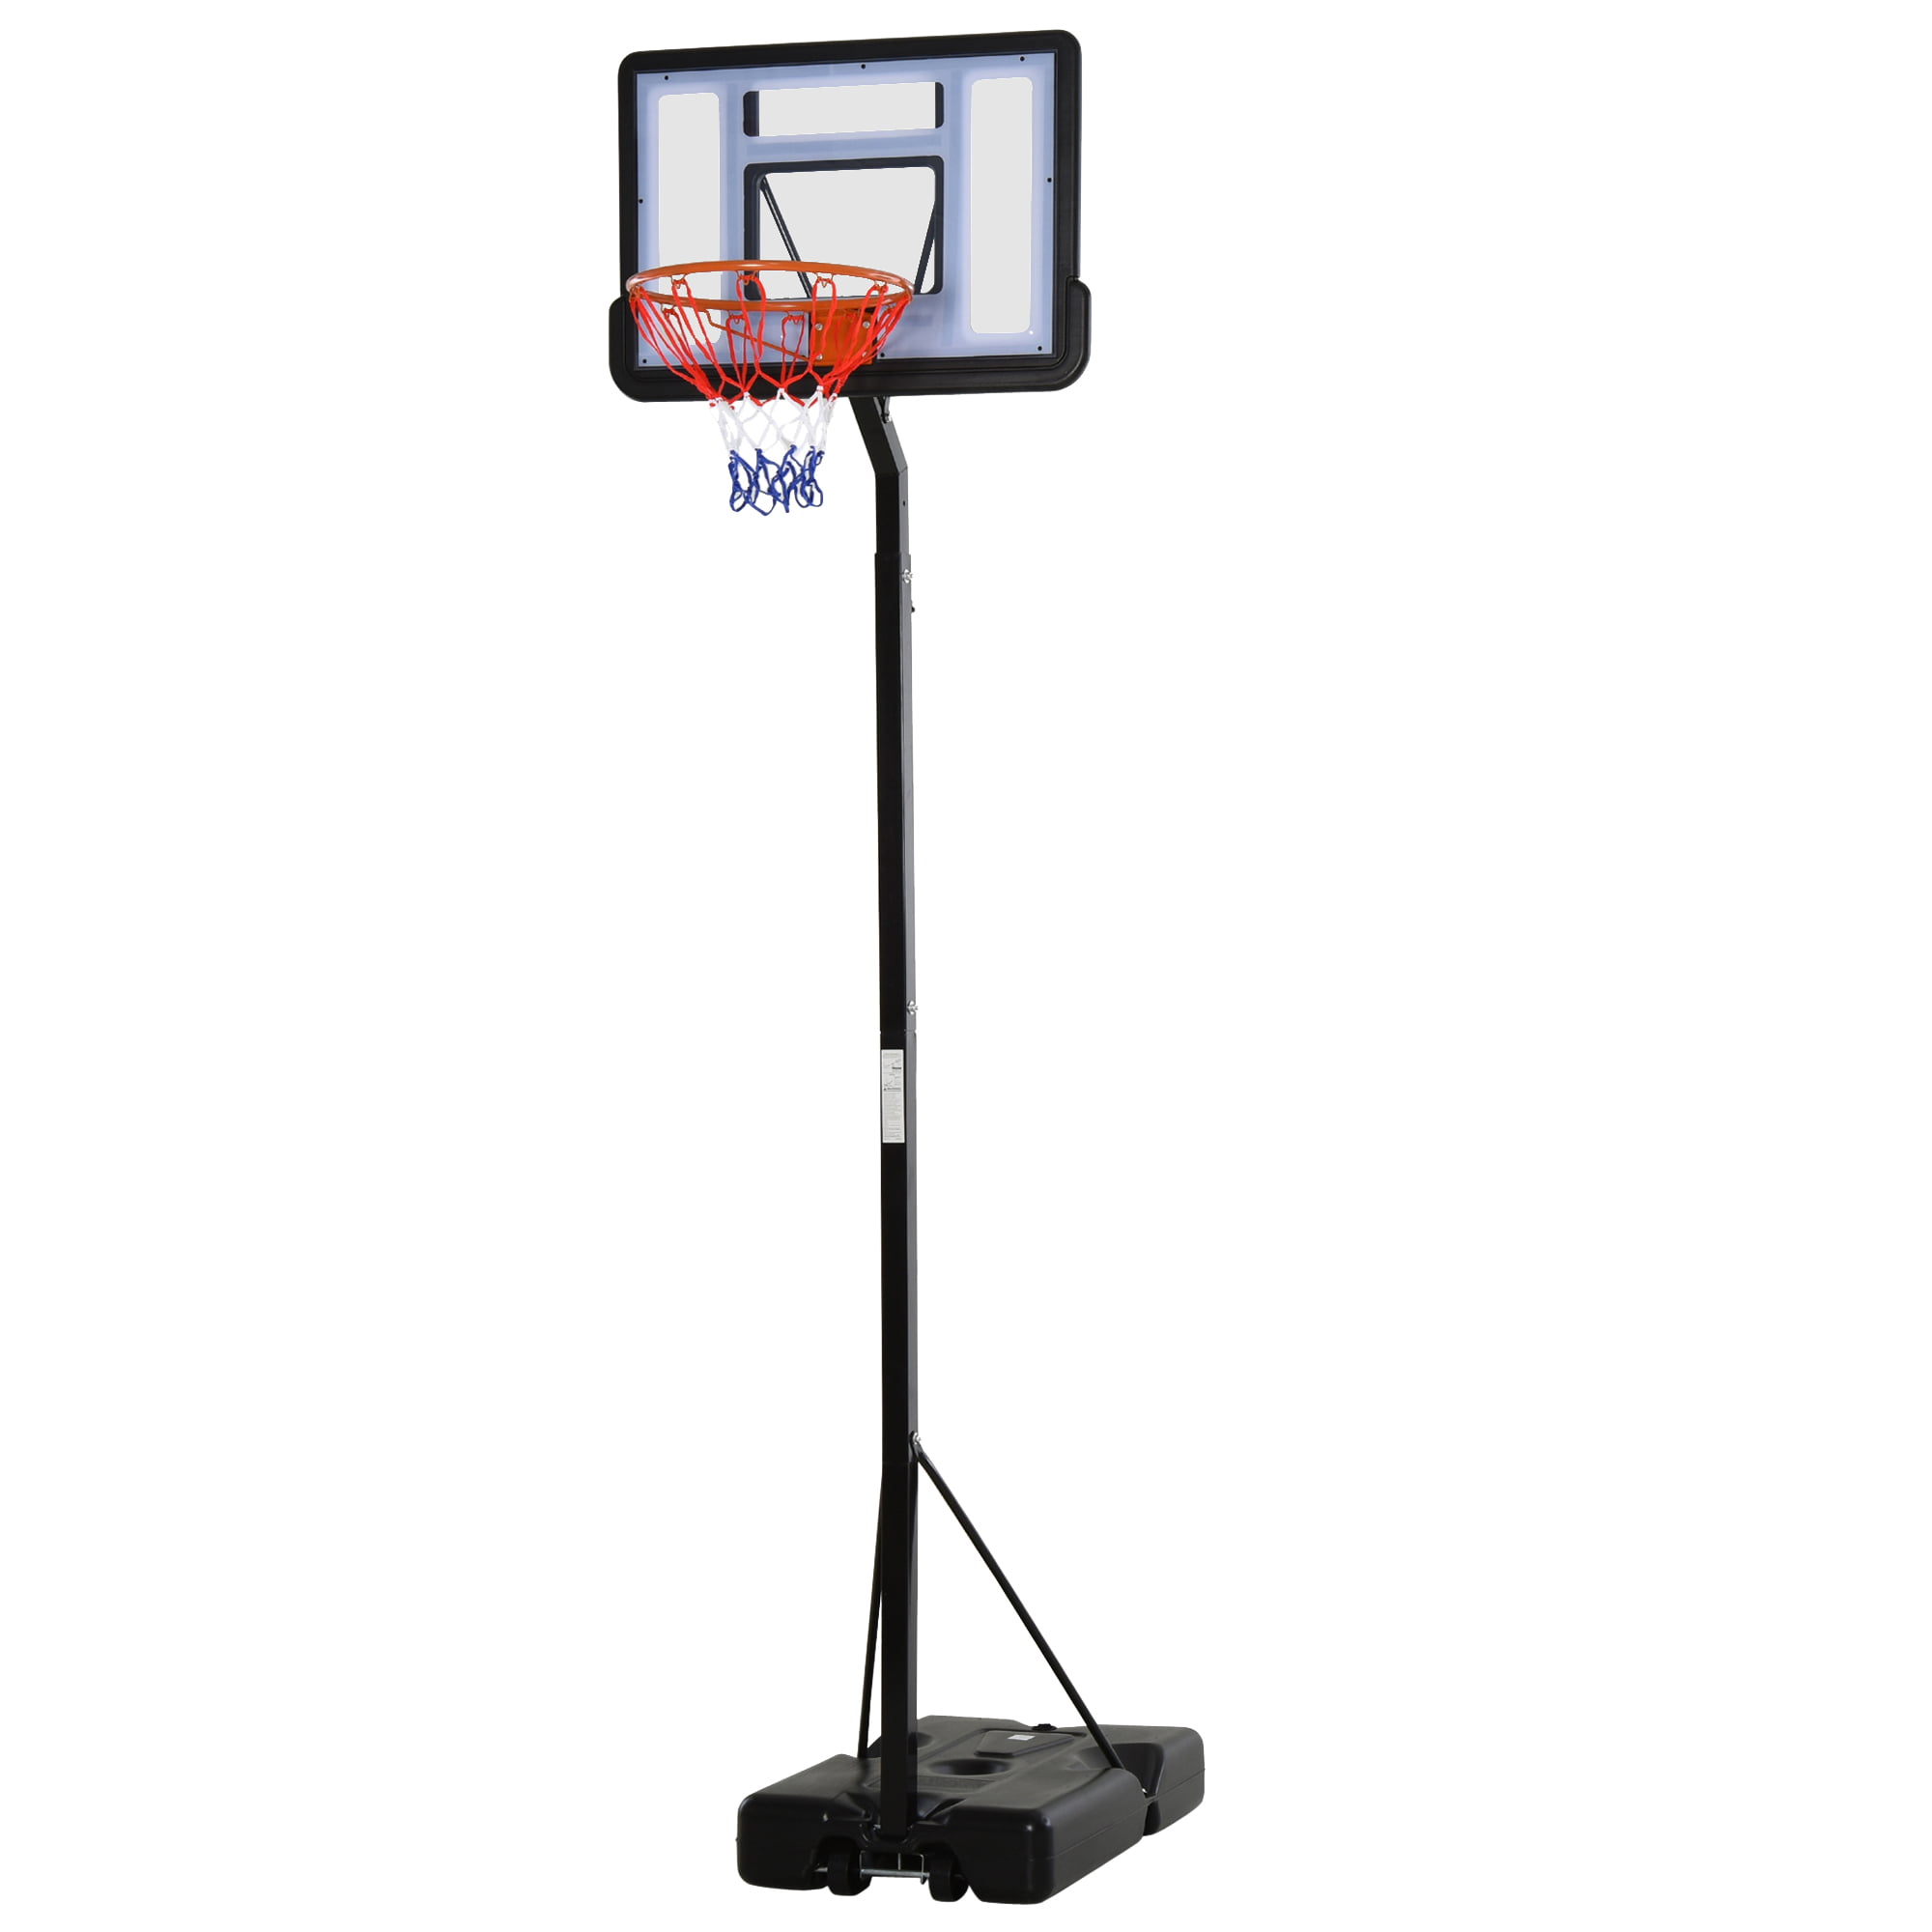 Soozier Basketball Hoop Freestanding Height Adjustable Stand with ...